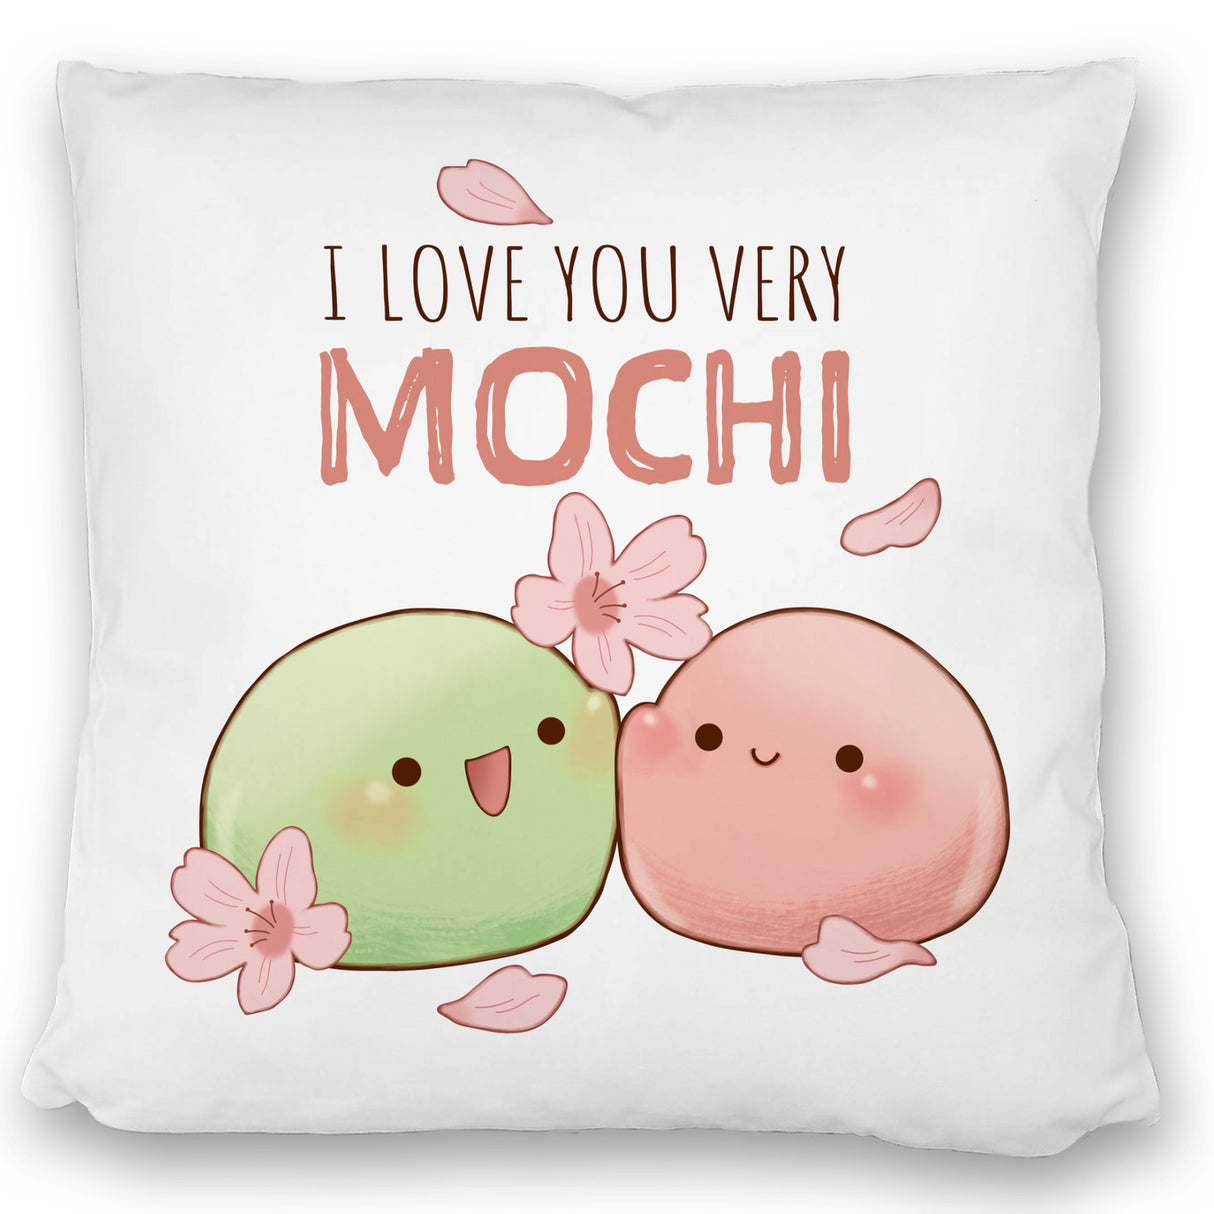 Mochi Paar Kissen mit Spruch I love you very Mochi